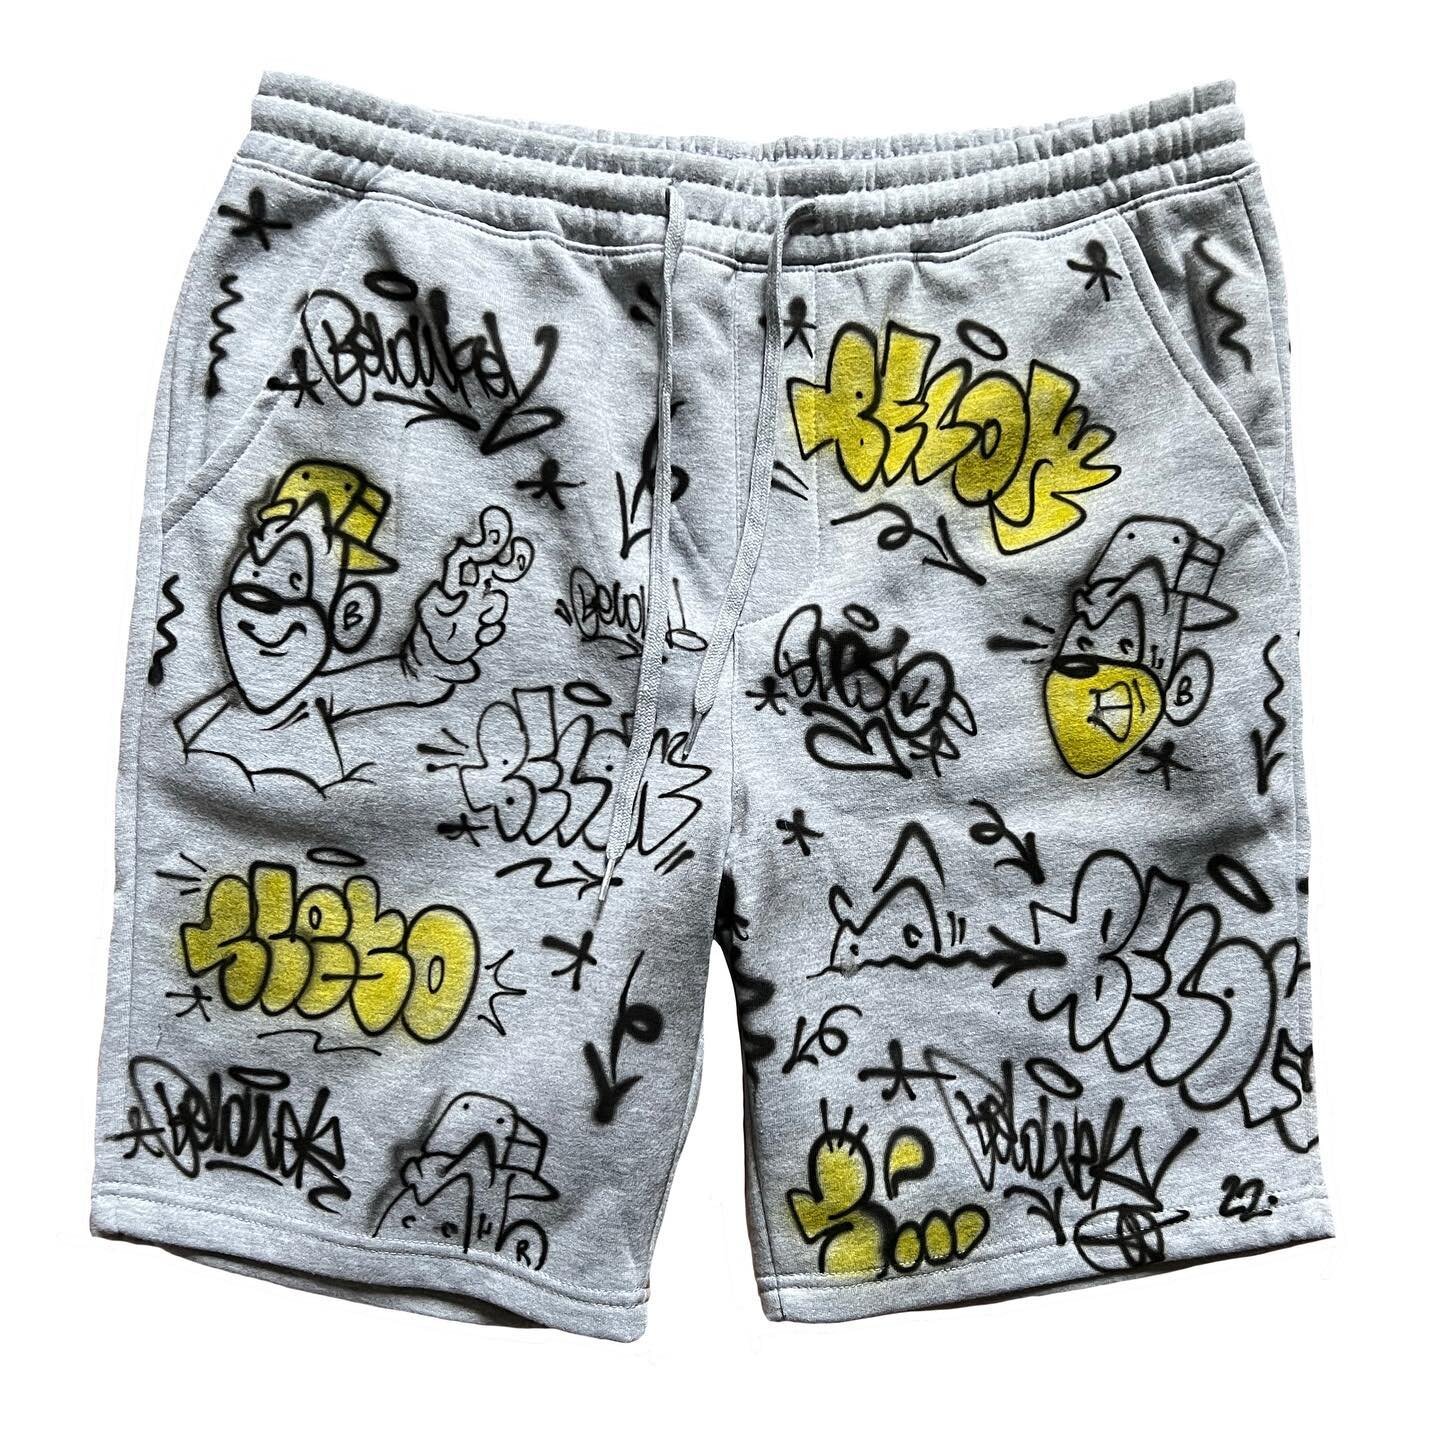 1 of 1 Airbrushed Shorts (Sold) 
Size : XL 
DM to inquire 
#airbrush #apparel #streetwear #Belowkey&reg; #belowkey #ogmonkey #below #nyc #graffiti #nycgraffiti